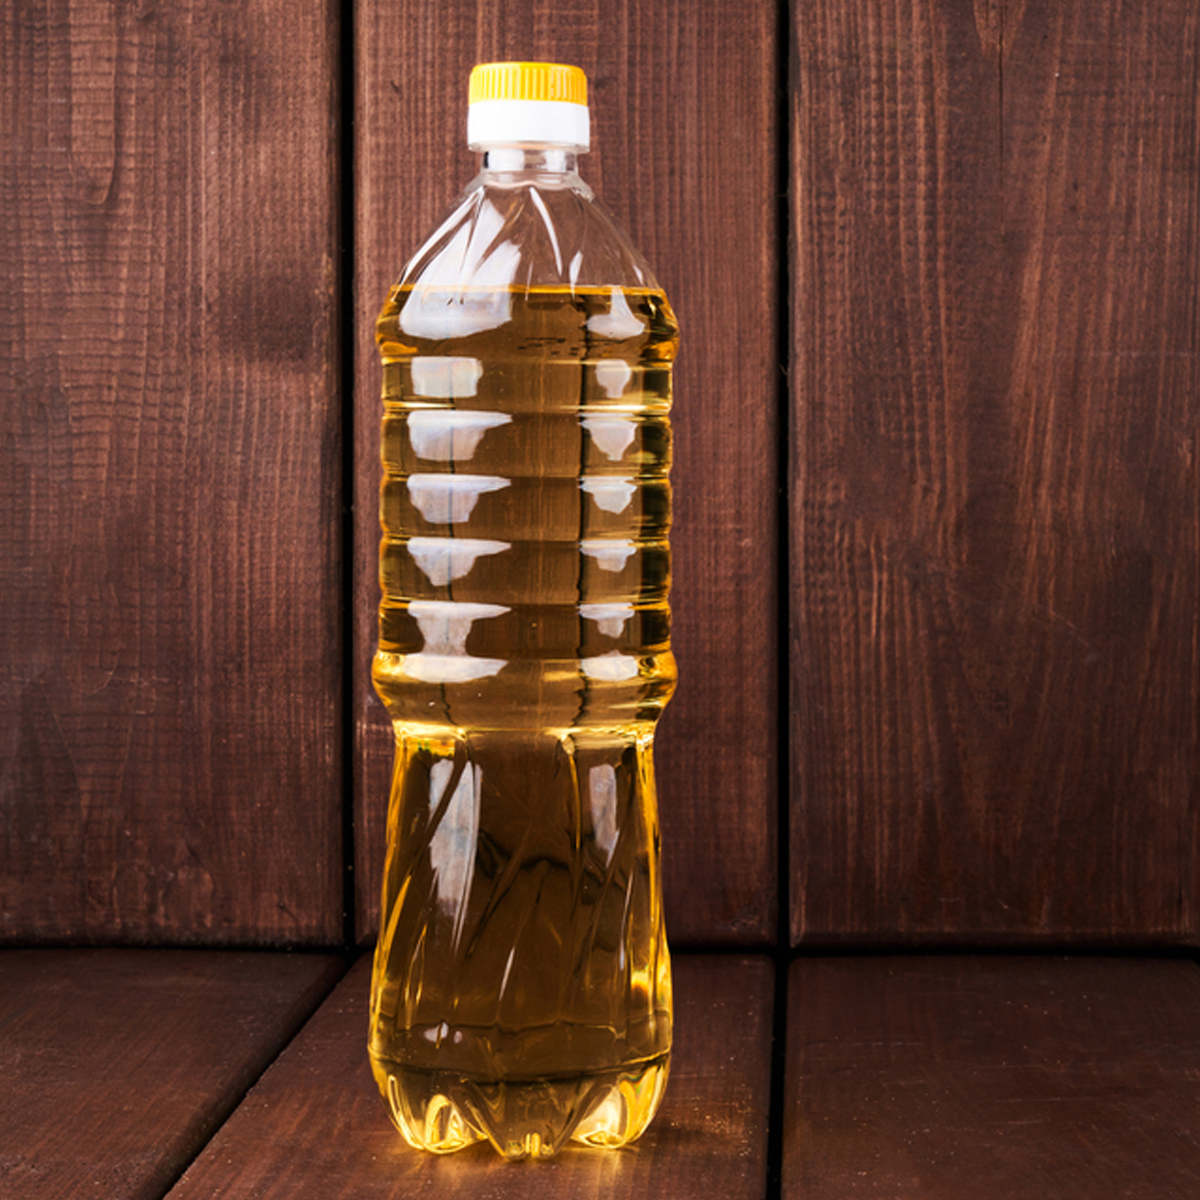 A plastic bottle of vegetable oil against a dark wood background.